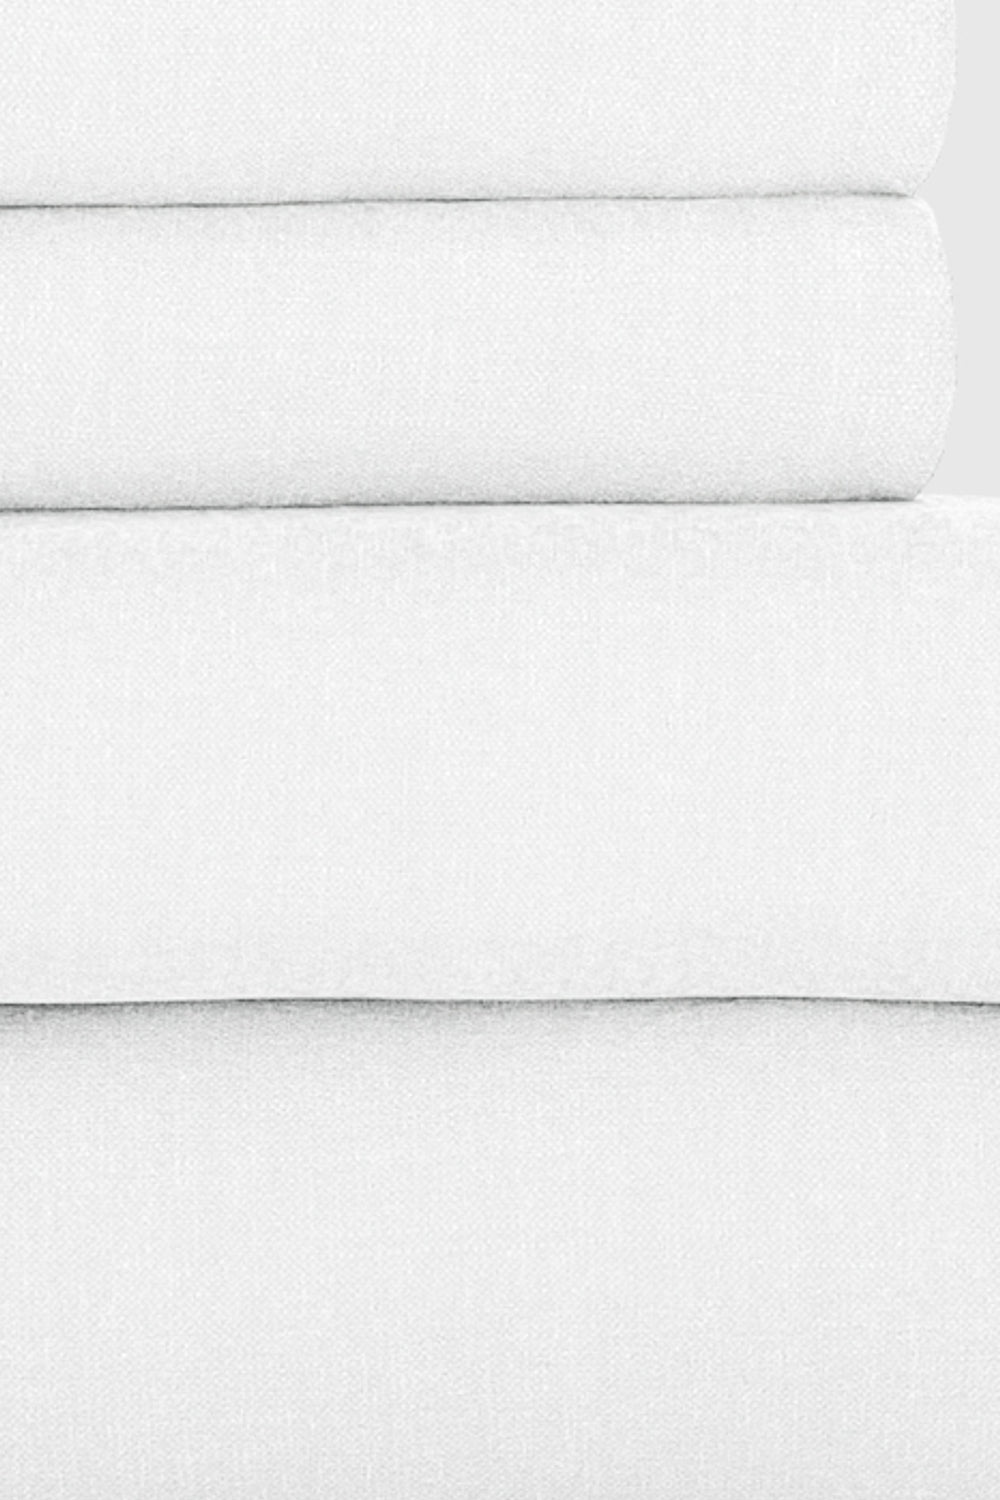 White Bamboo/Linen Sheet Set